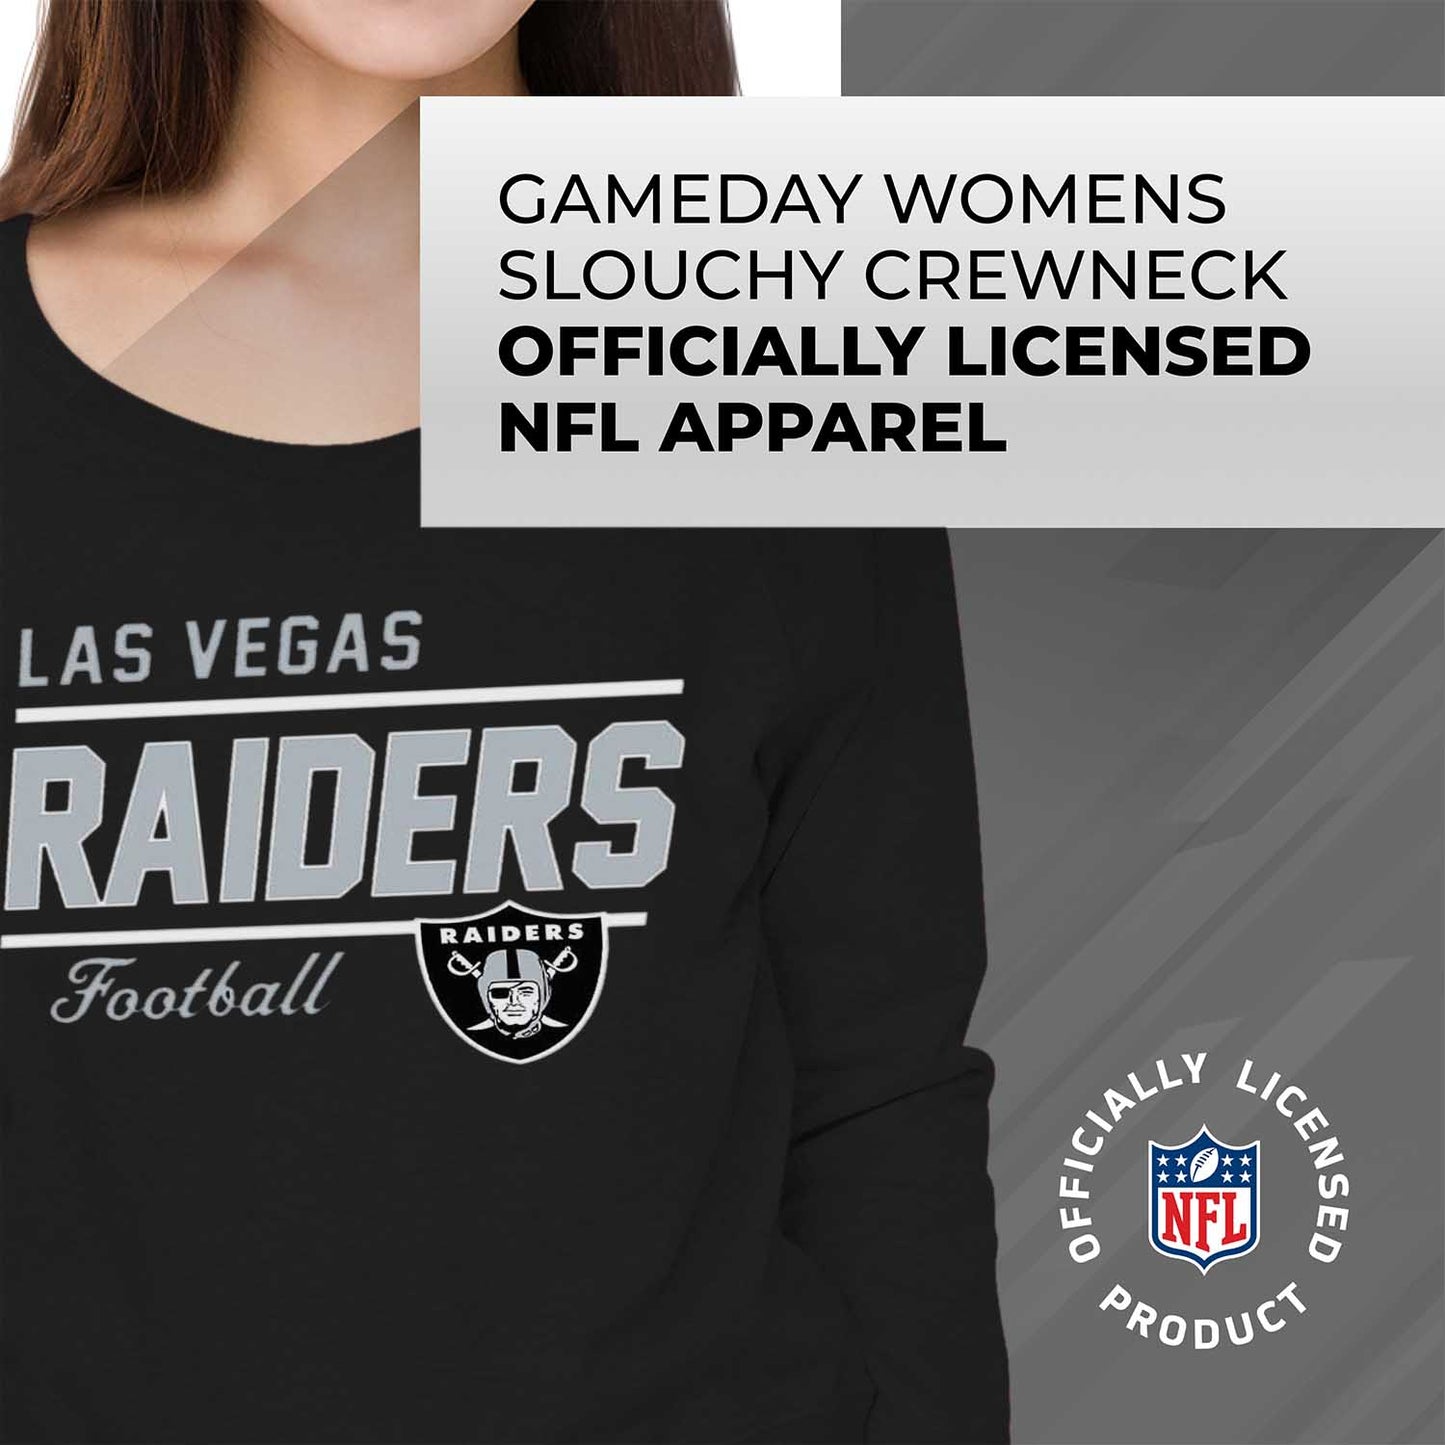 Las Vegas Raiders NFL Womens Crew Neck Light Weight - Black